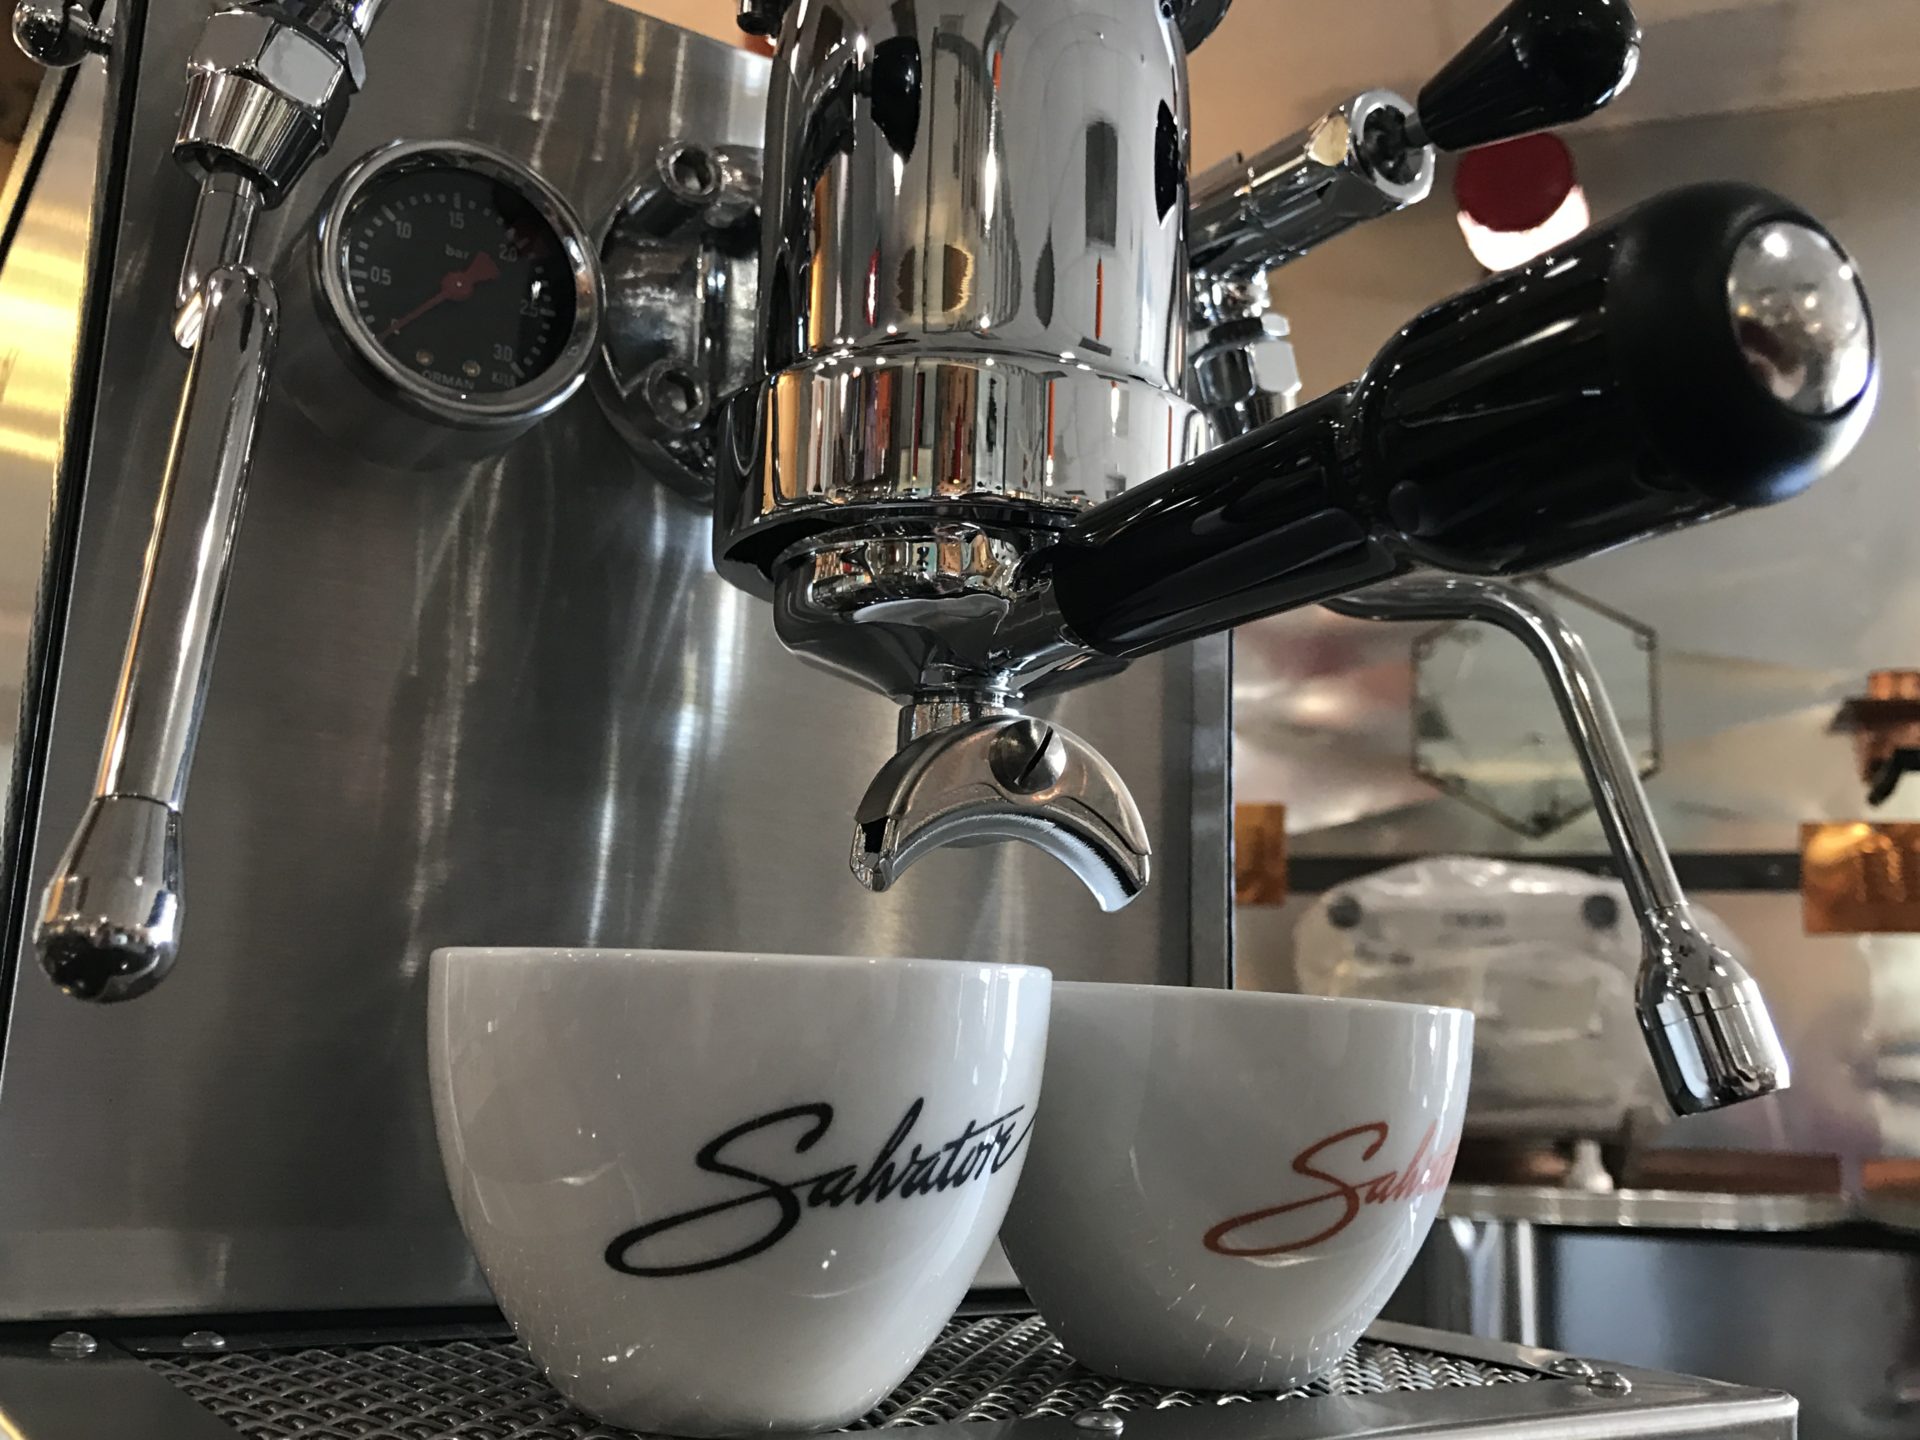 Espresso Cups and Saucers - ESPRESSO SUPERSTORE